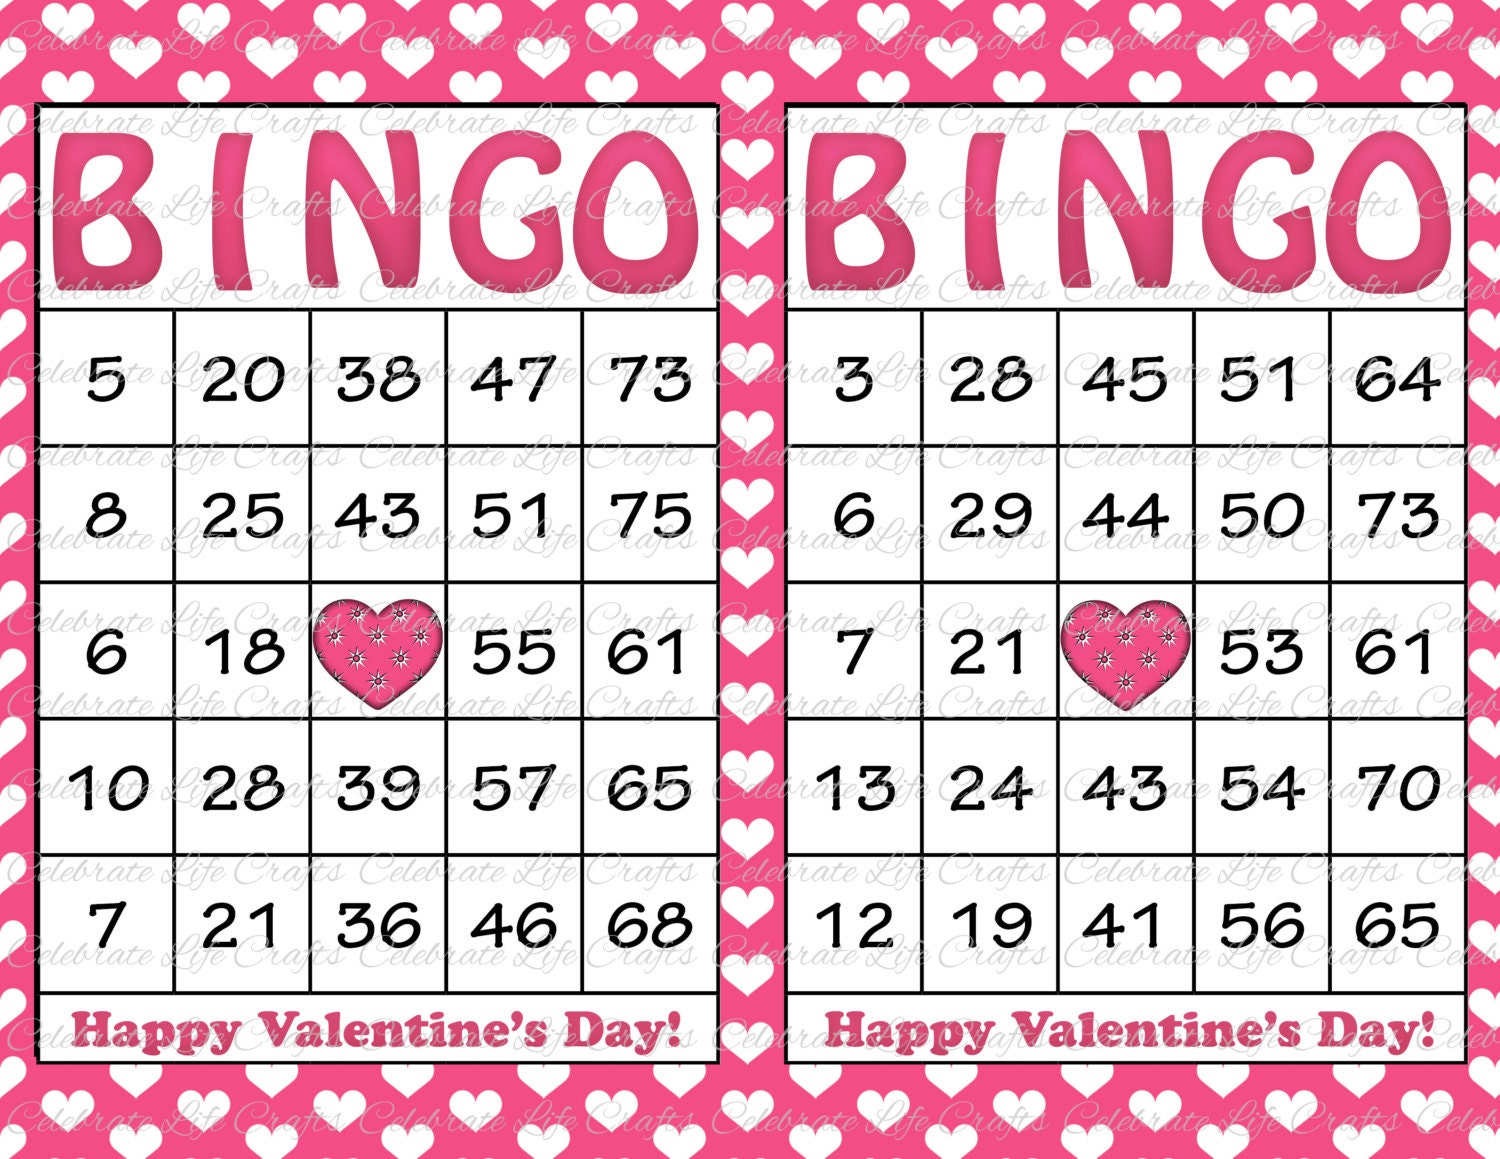 free-valentine-bingo-game-printable-collection-for-kids